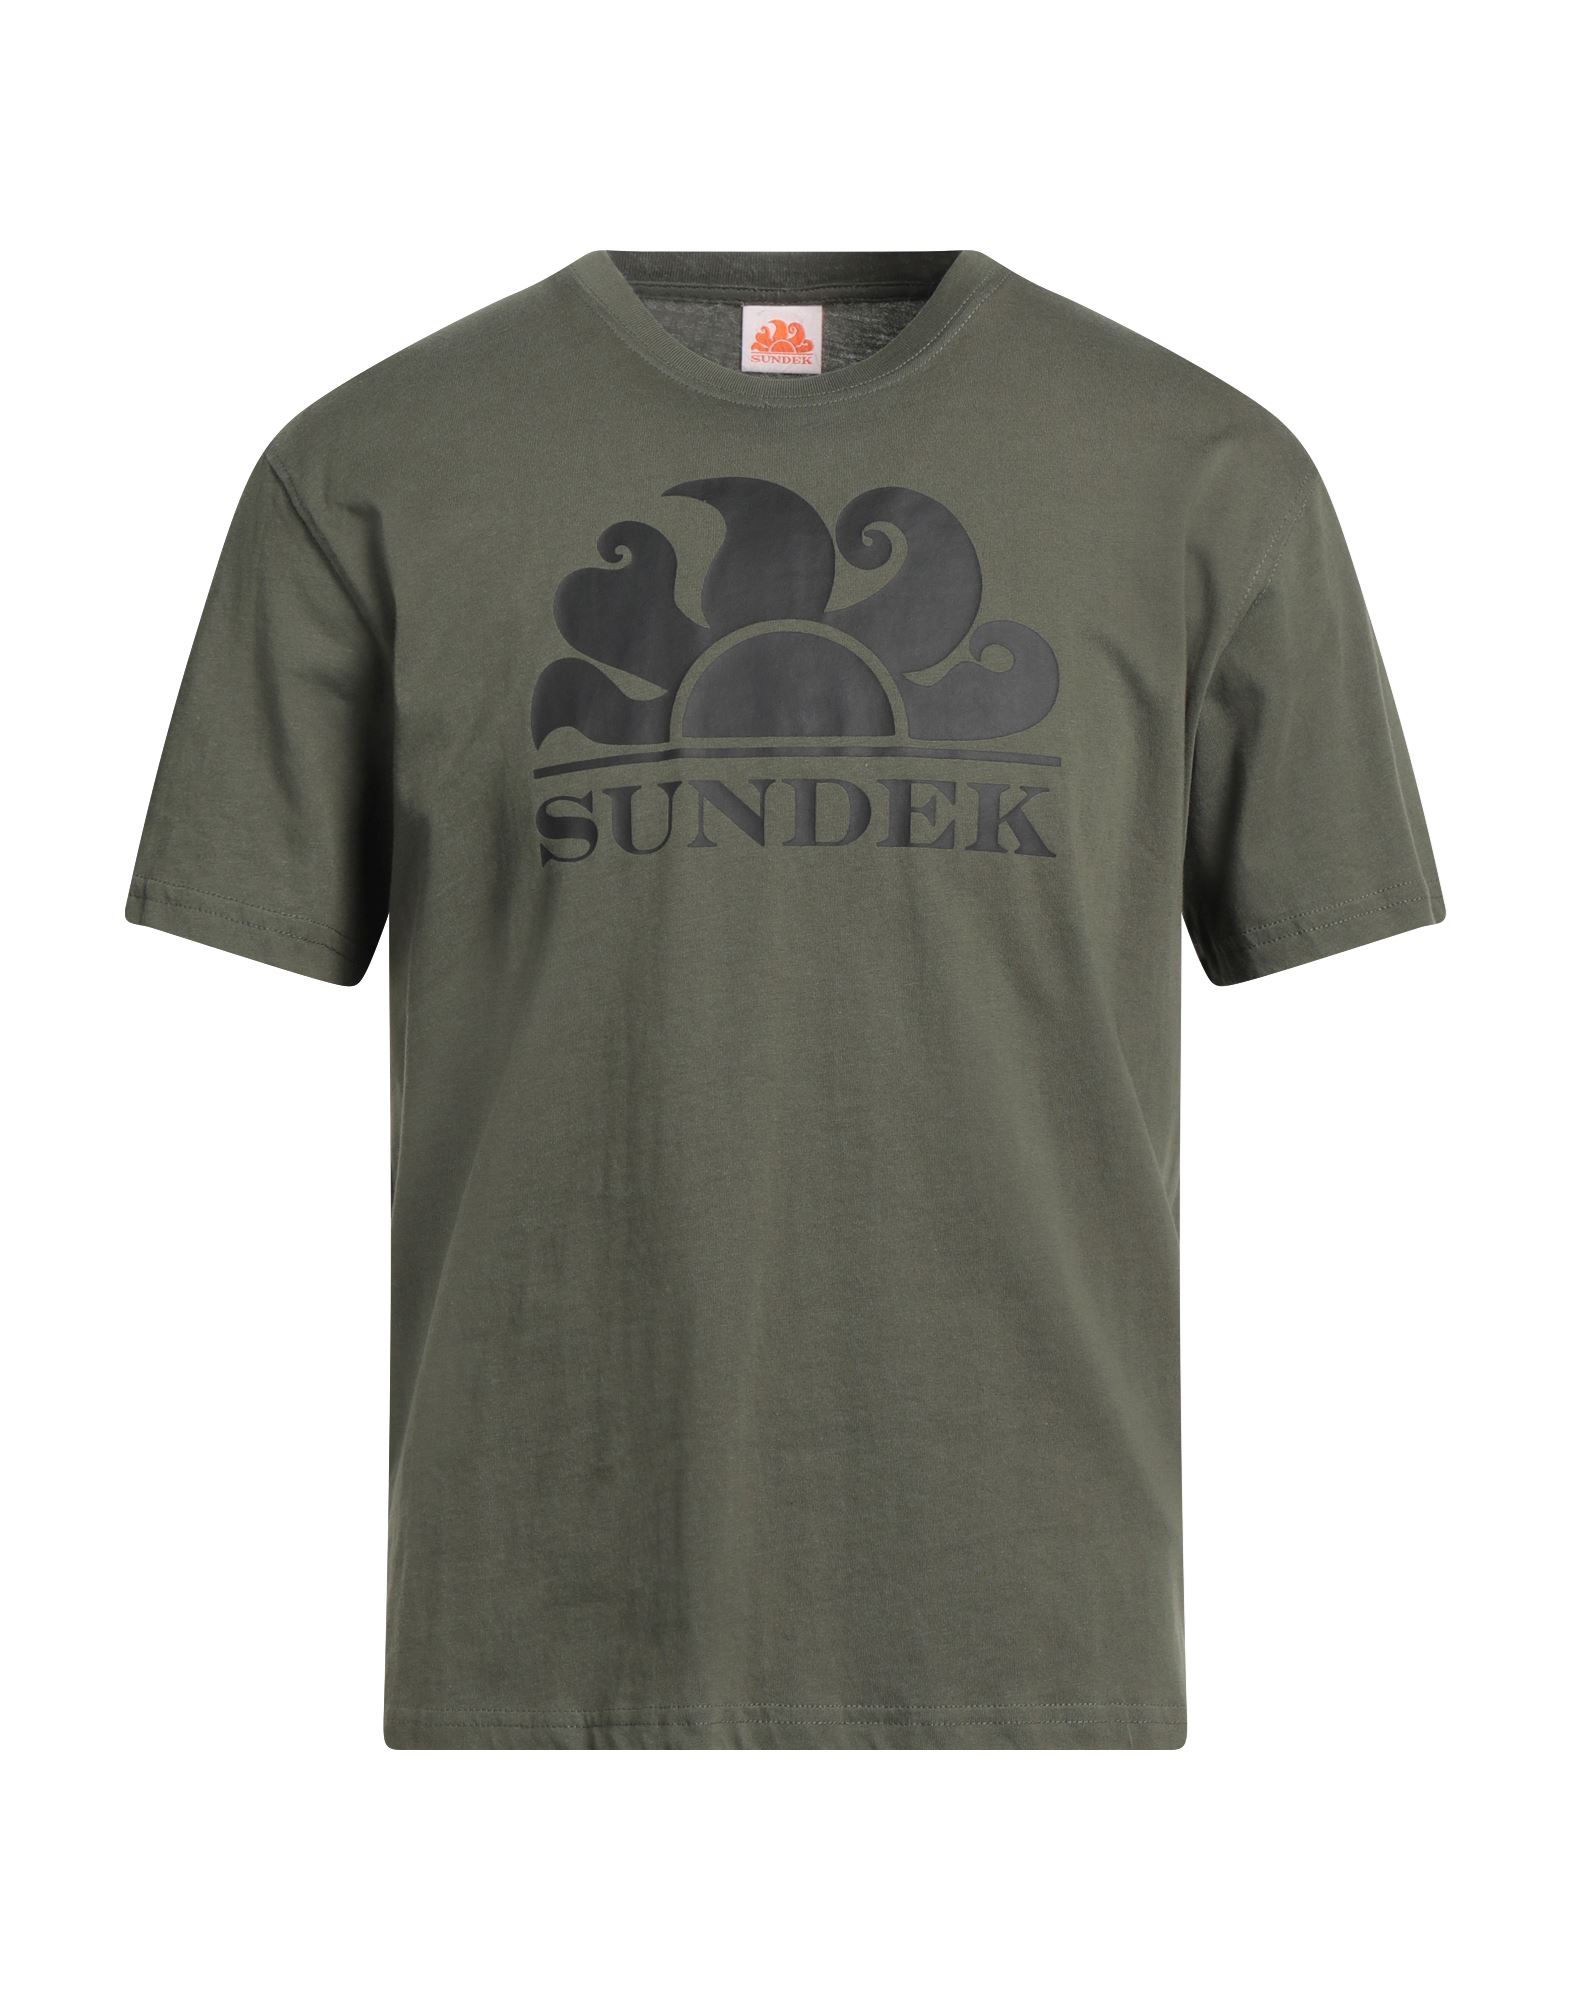 Sundek T-shirts In Military Green